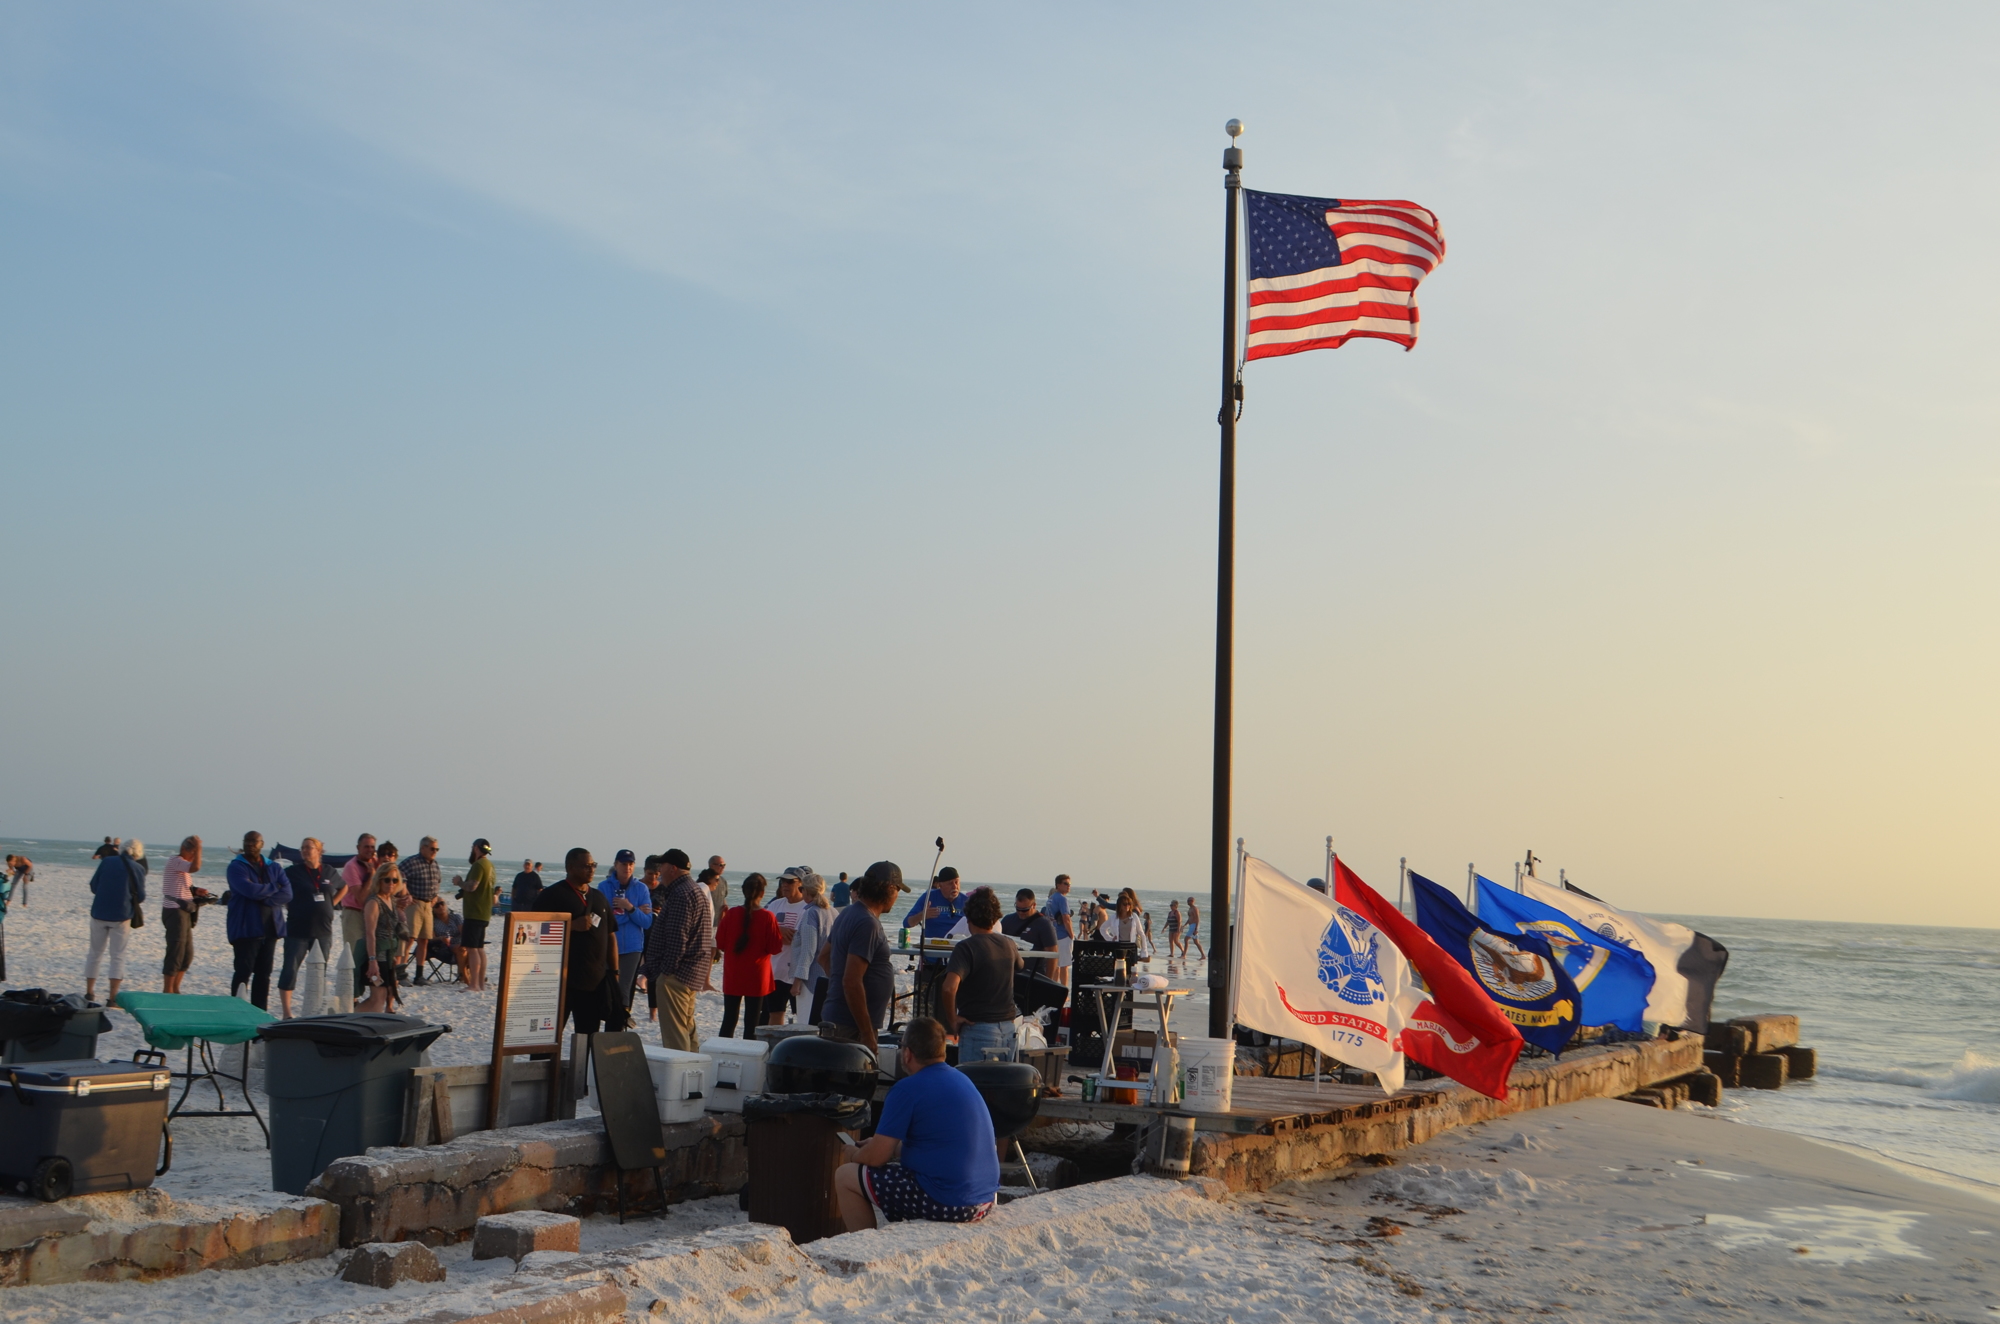 An American flag waves next to military flags on Siesta Key Beach.